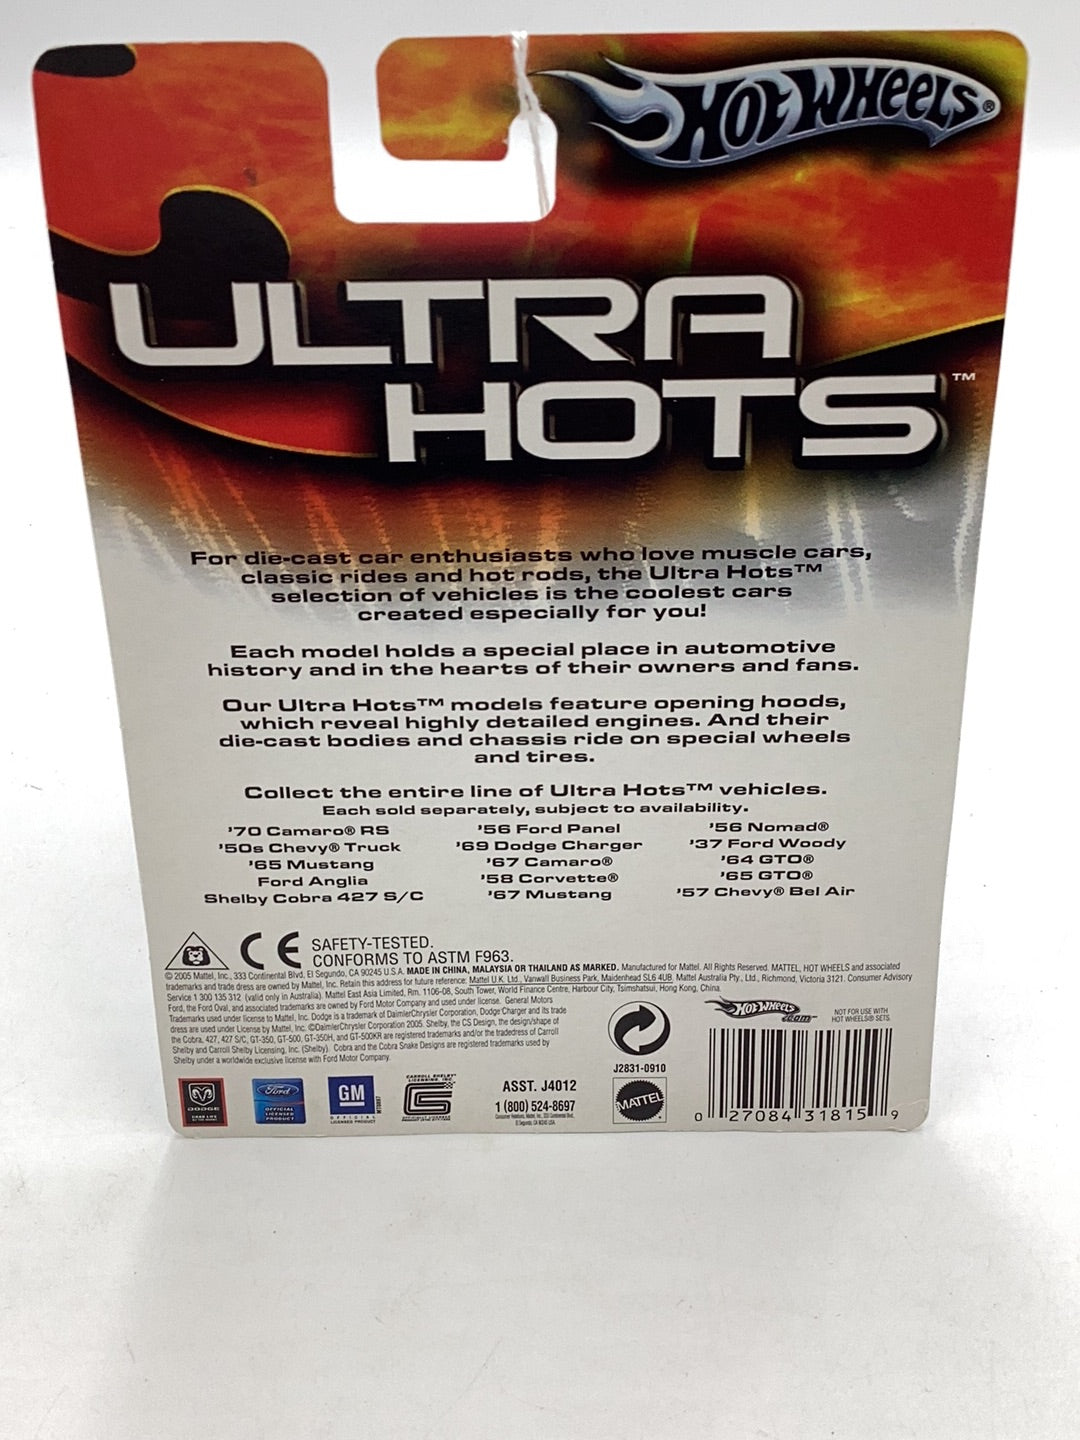 Hot wheels Ultra Hots 2005 ‘65 Mustang Convertible 257I